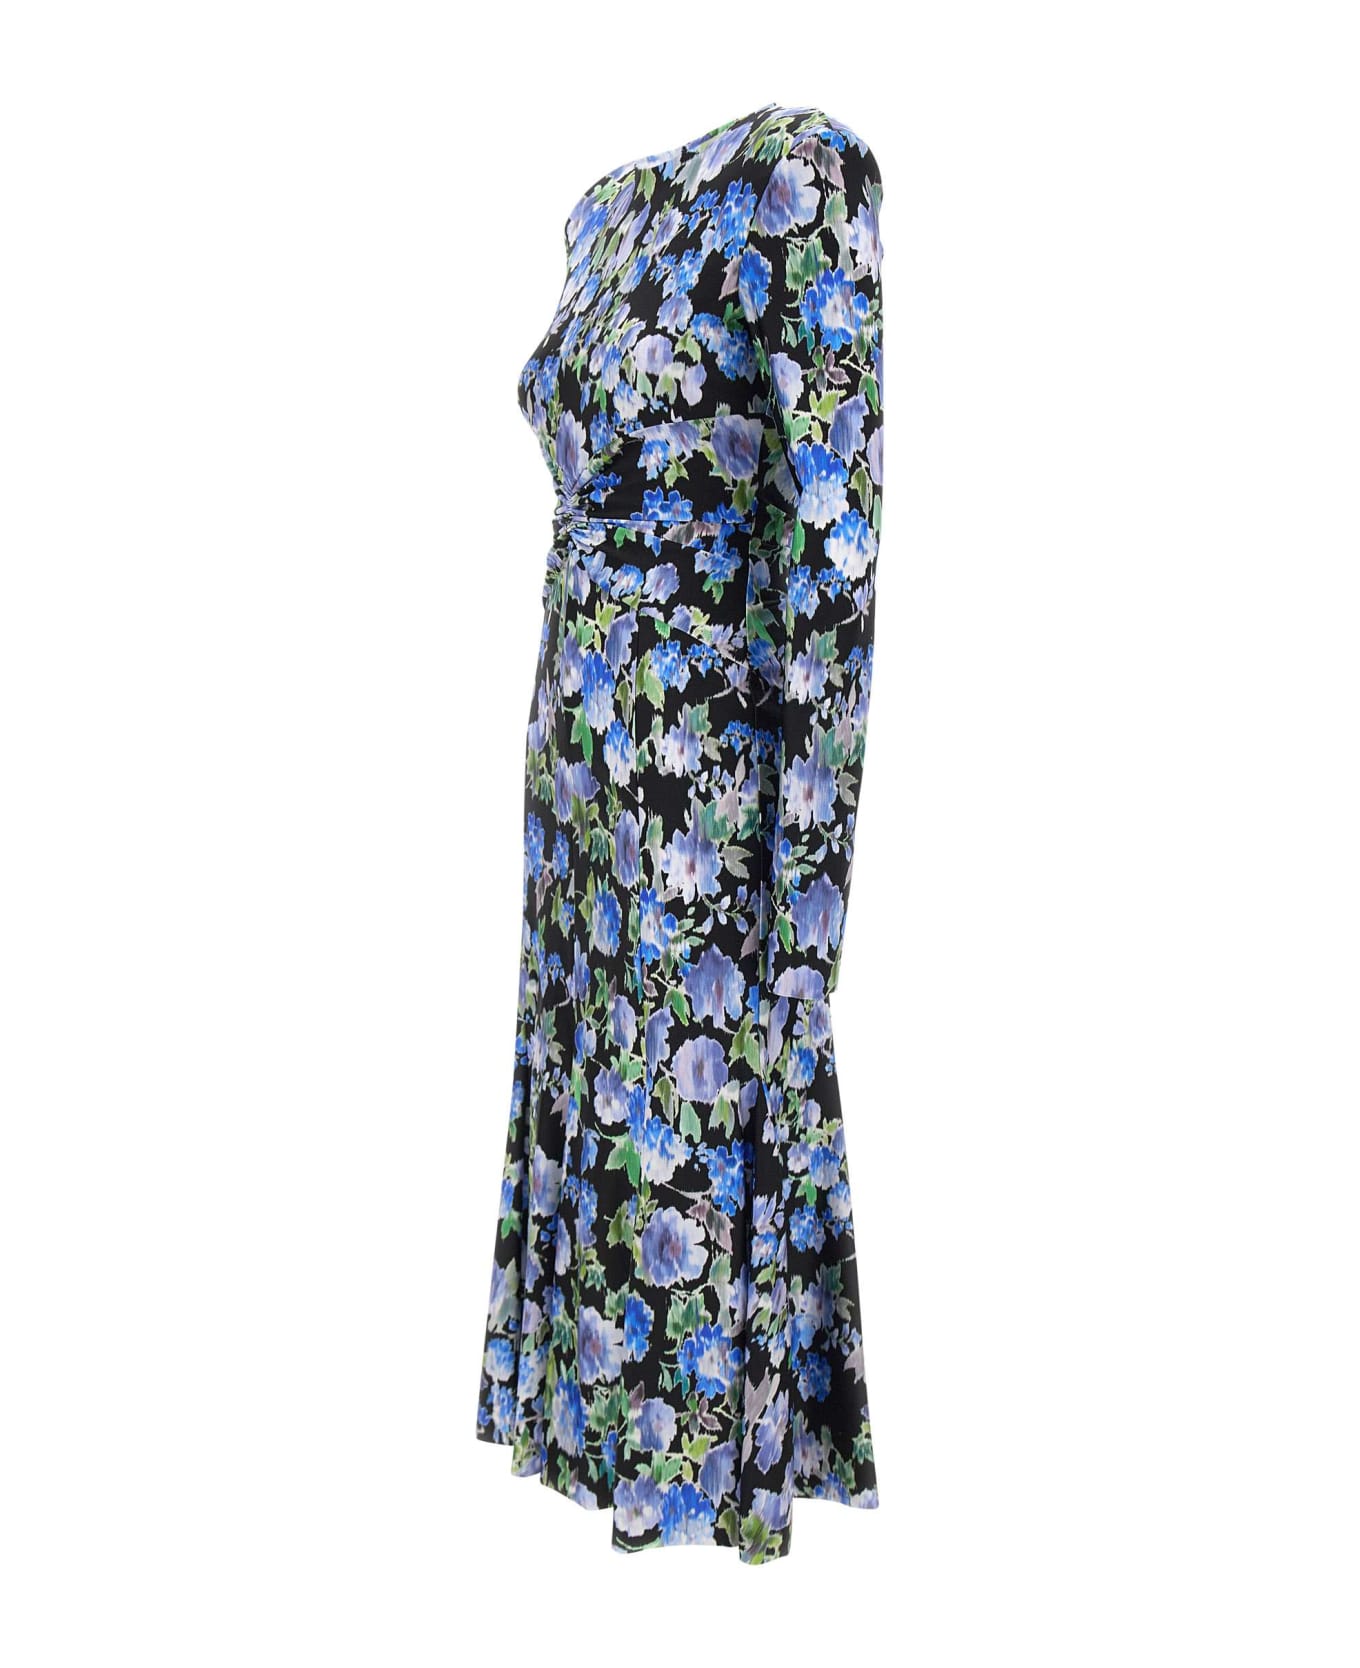 Philosophy di Lorenzo Serafini Flower Dress - BLUE